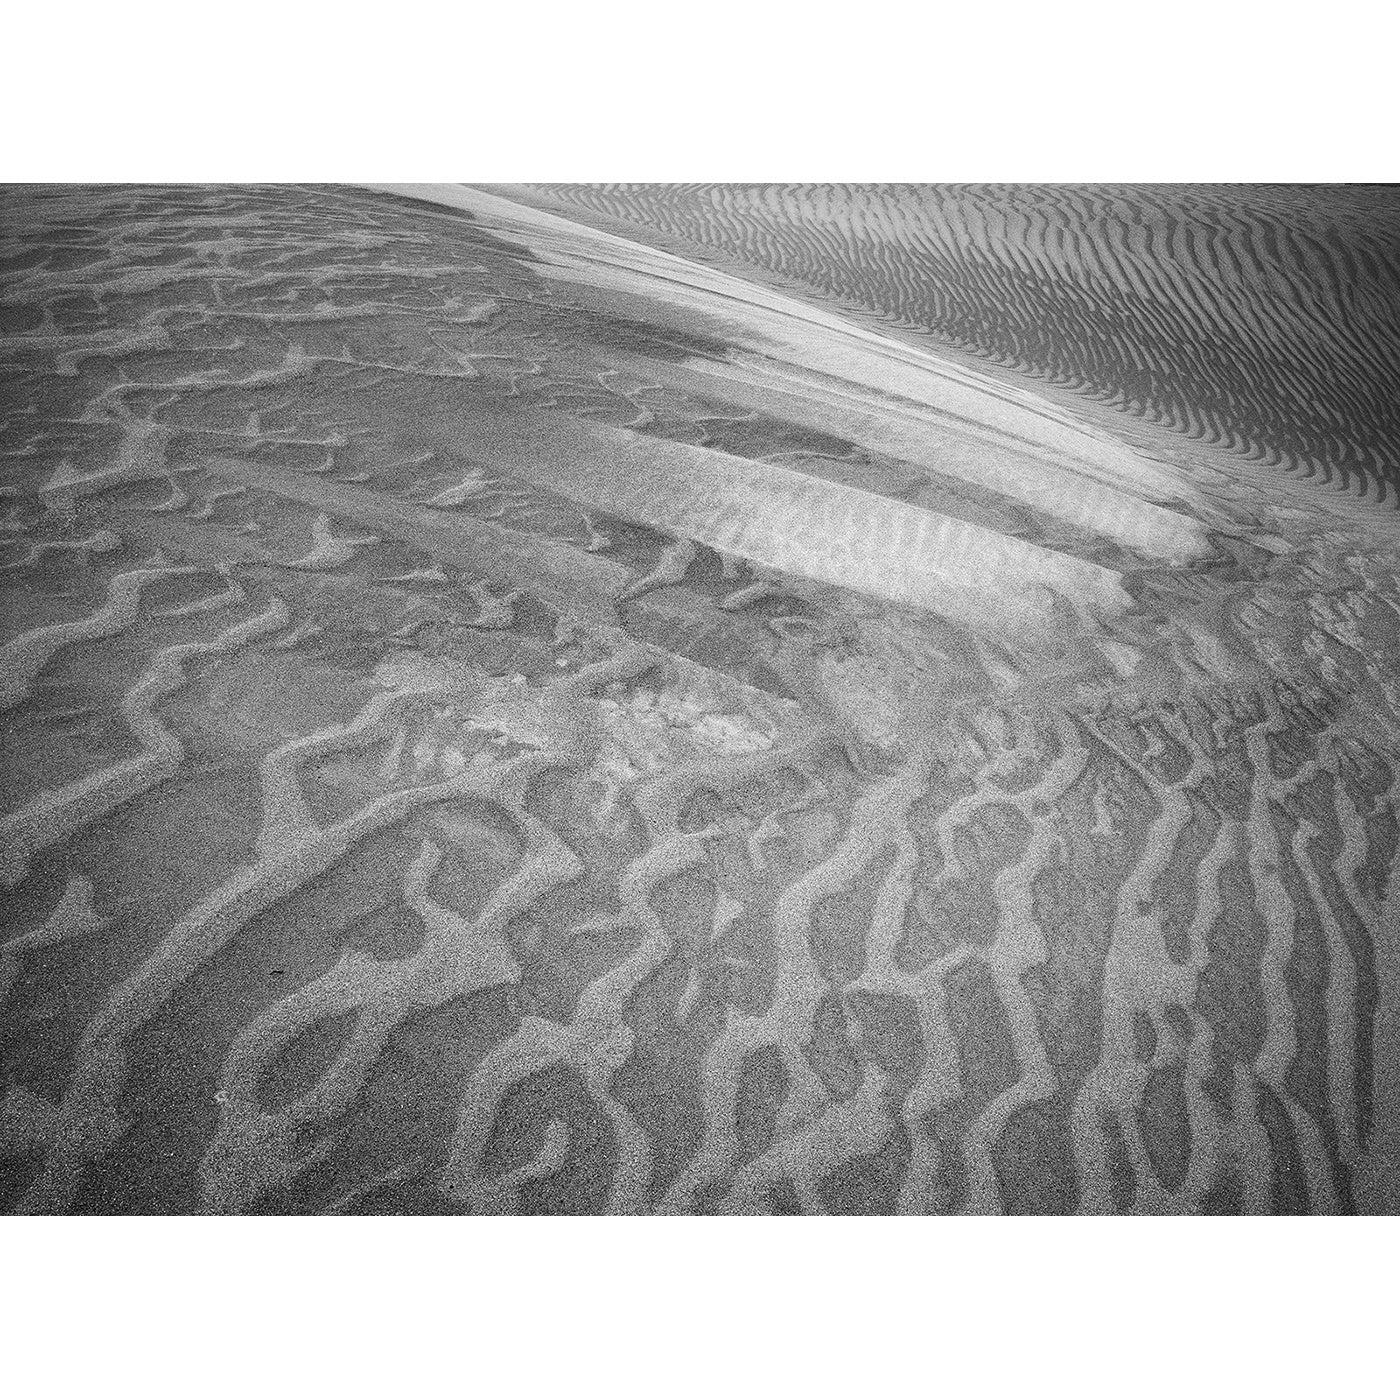 Chris Bell - Sand Dunes